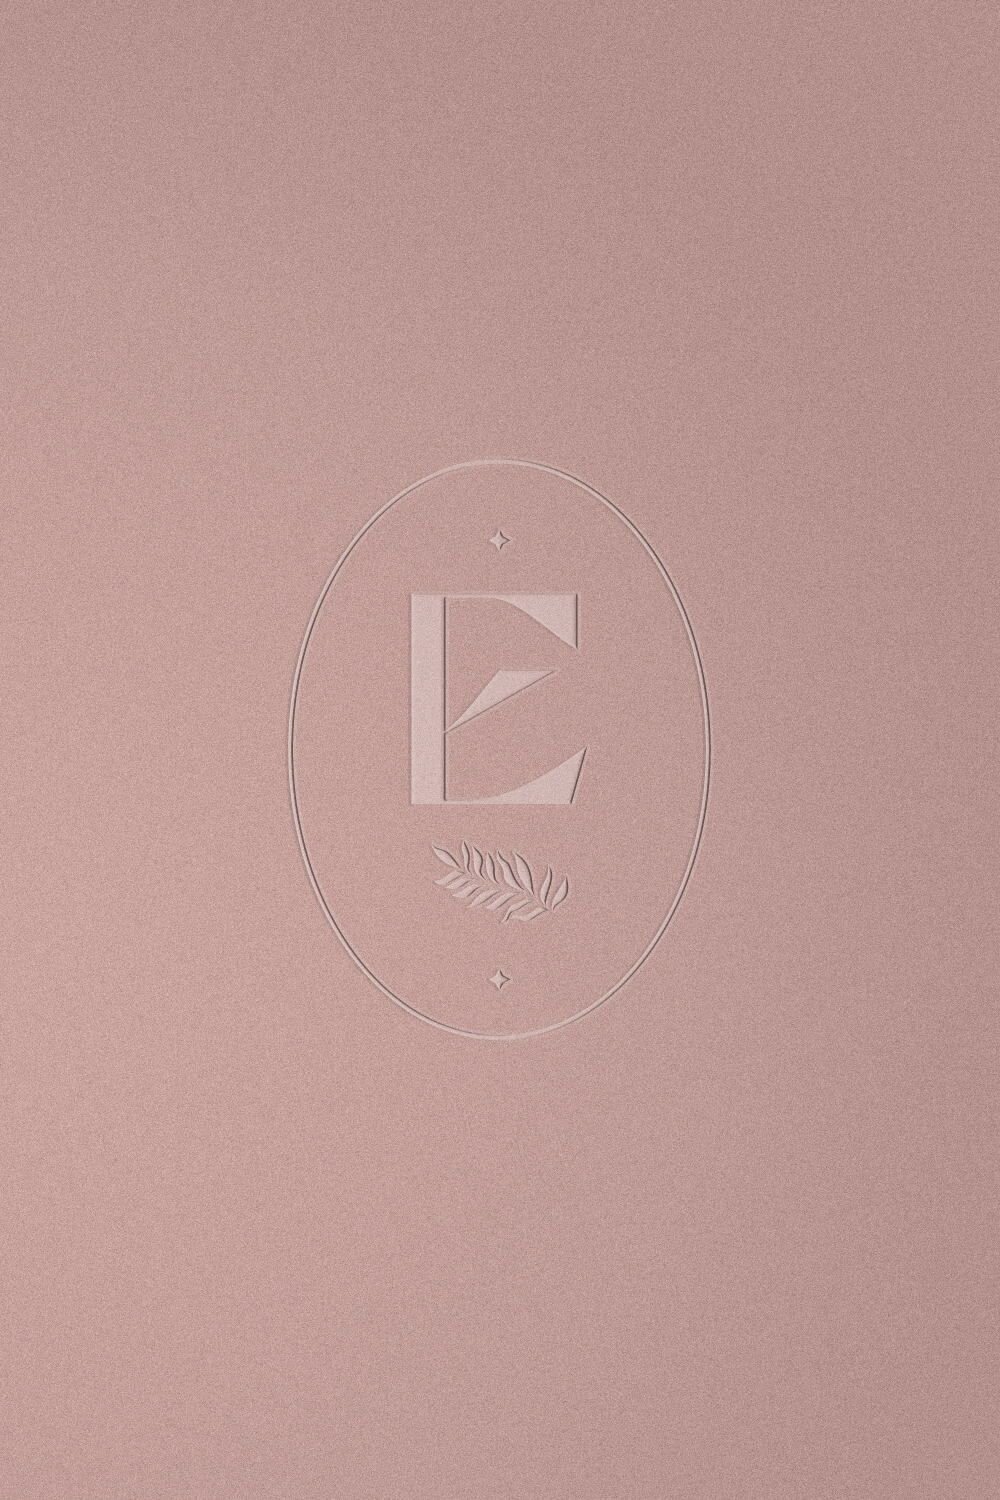 embossed submark logo of an e-commerce brand on pink paper